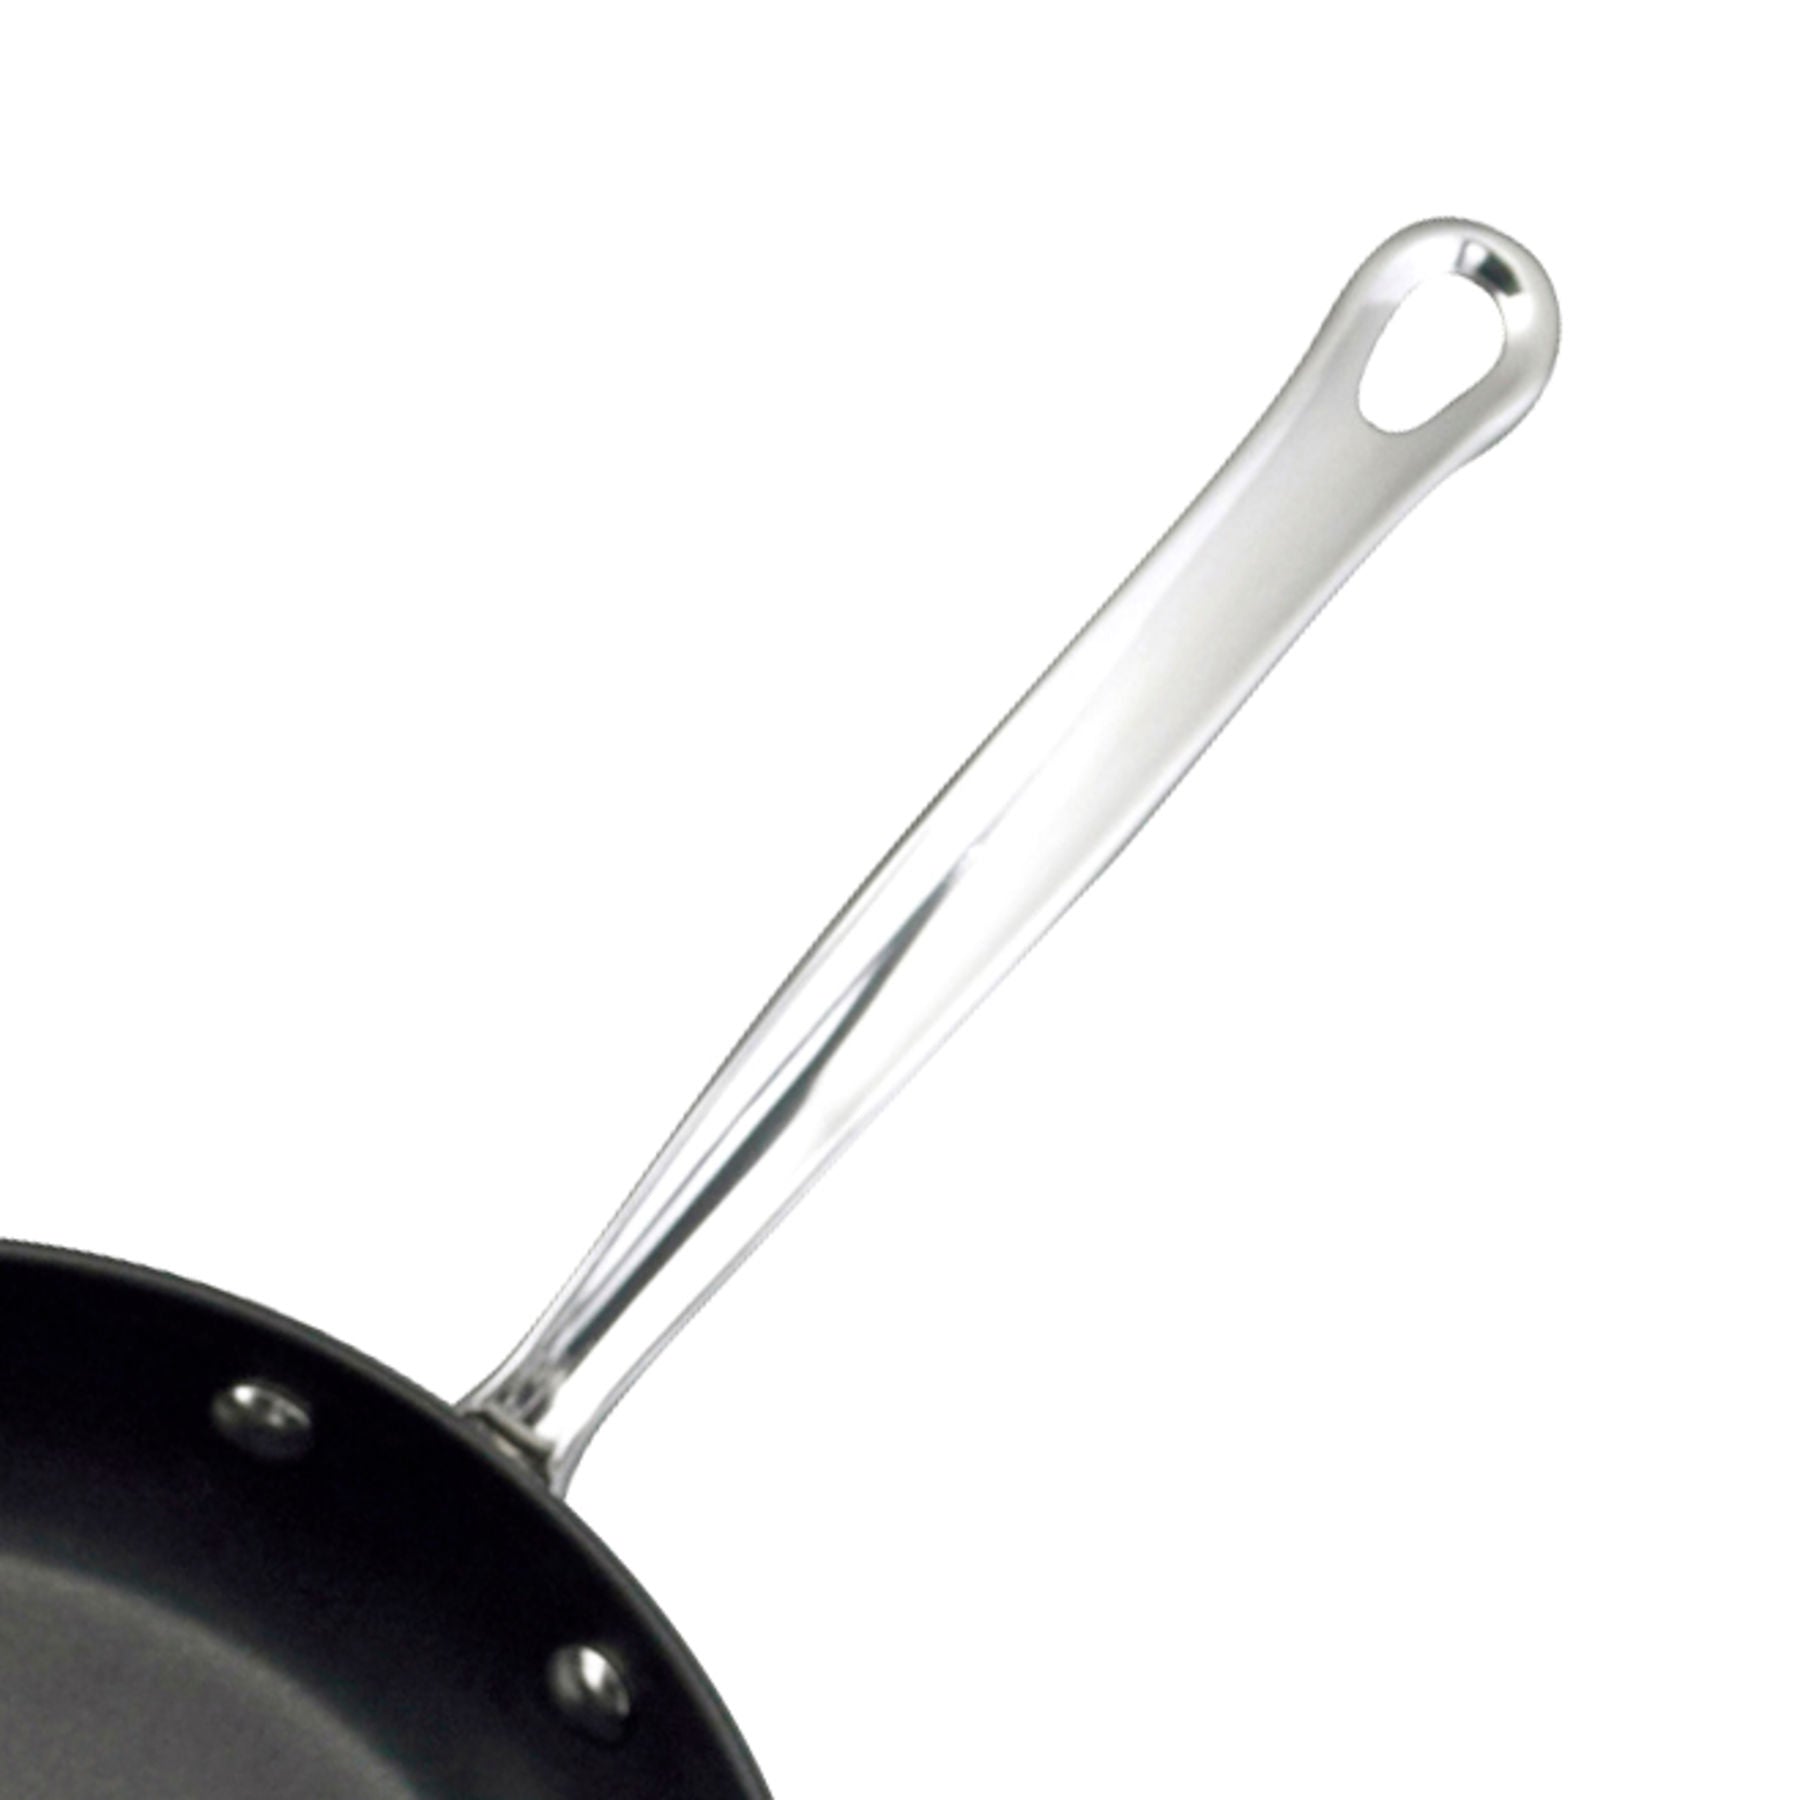 Farberware Millennium Stainless Steel Nonstick Cookware Set, 10-Piece Pot  and Pan Set, Stainless Steel